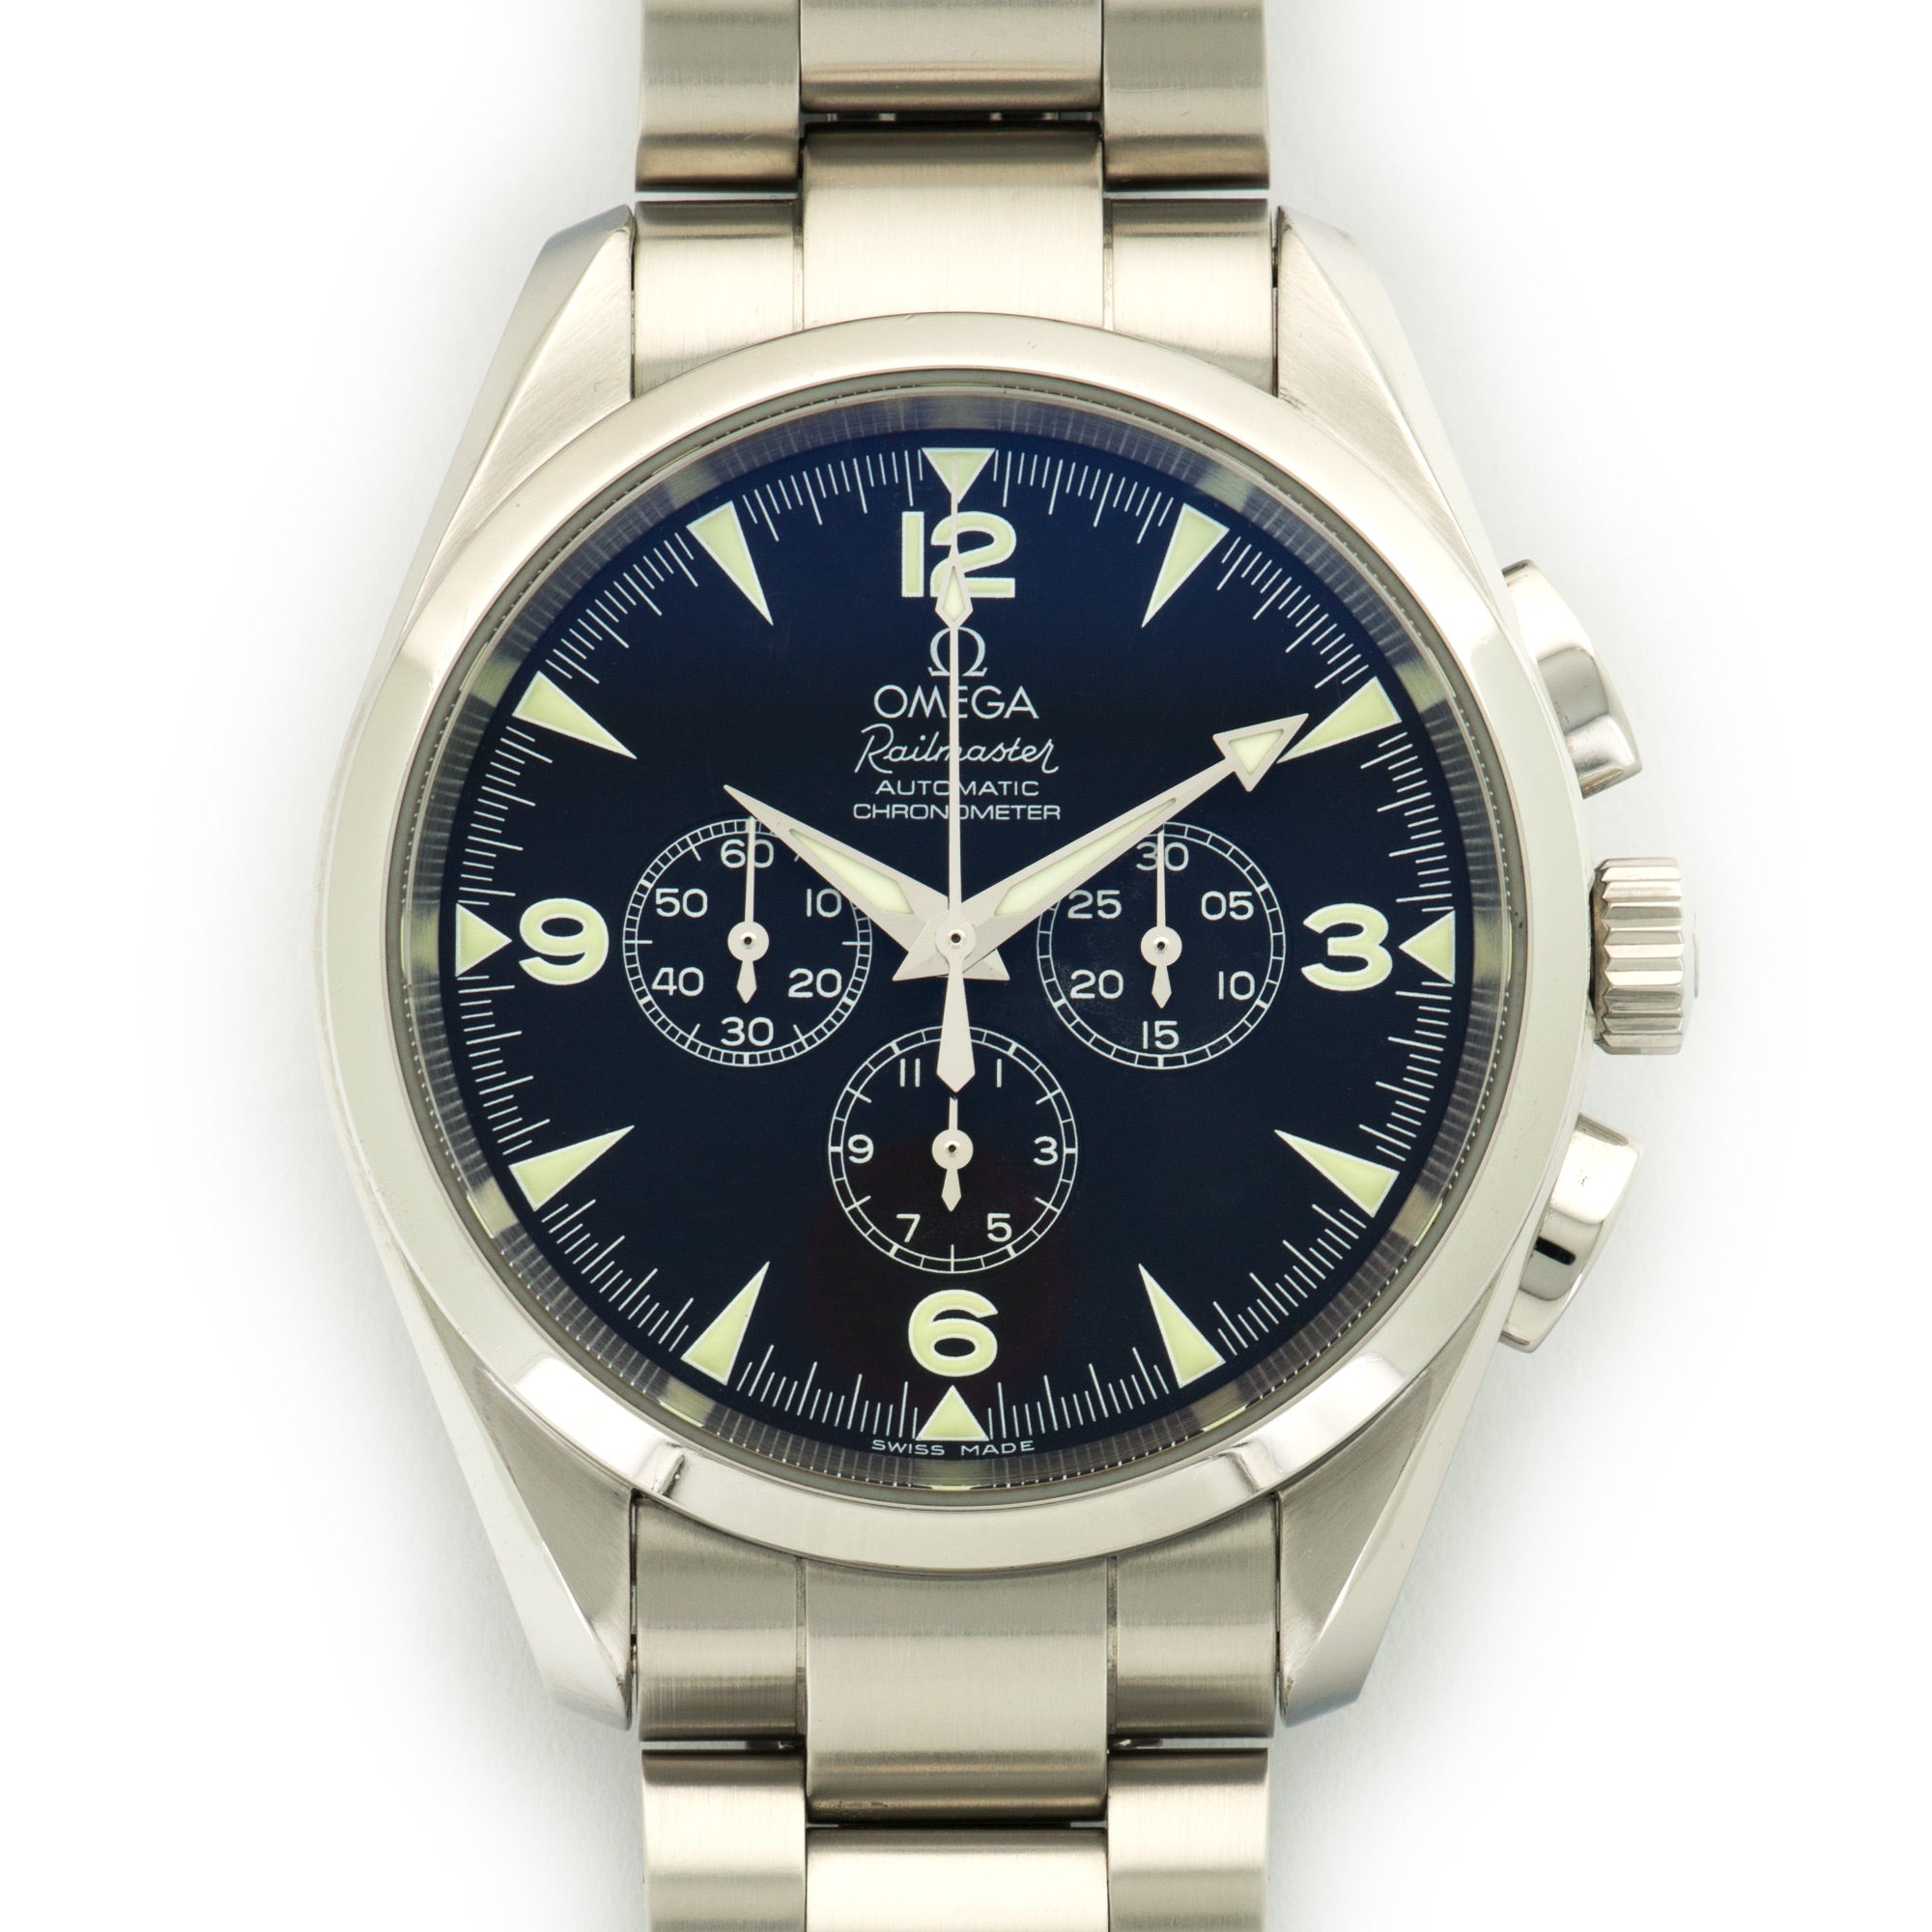 Omega - Omega Railmaster Automatic Chronograph Watch Ref. 2812.52.37 - The Keystone Watches